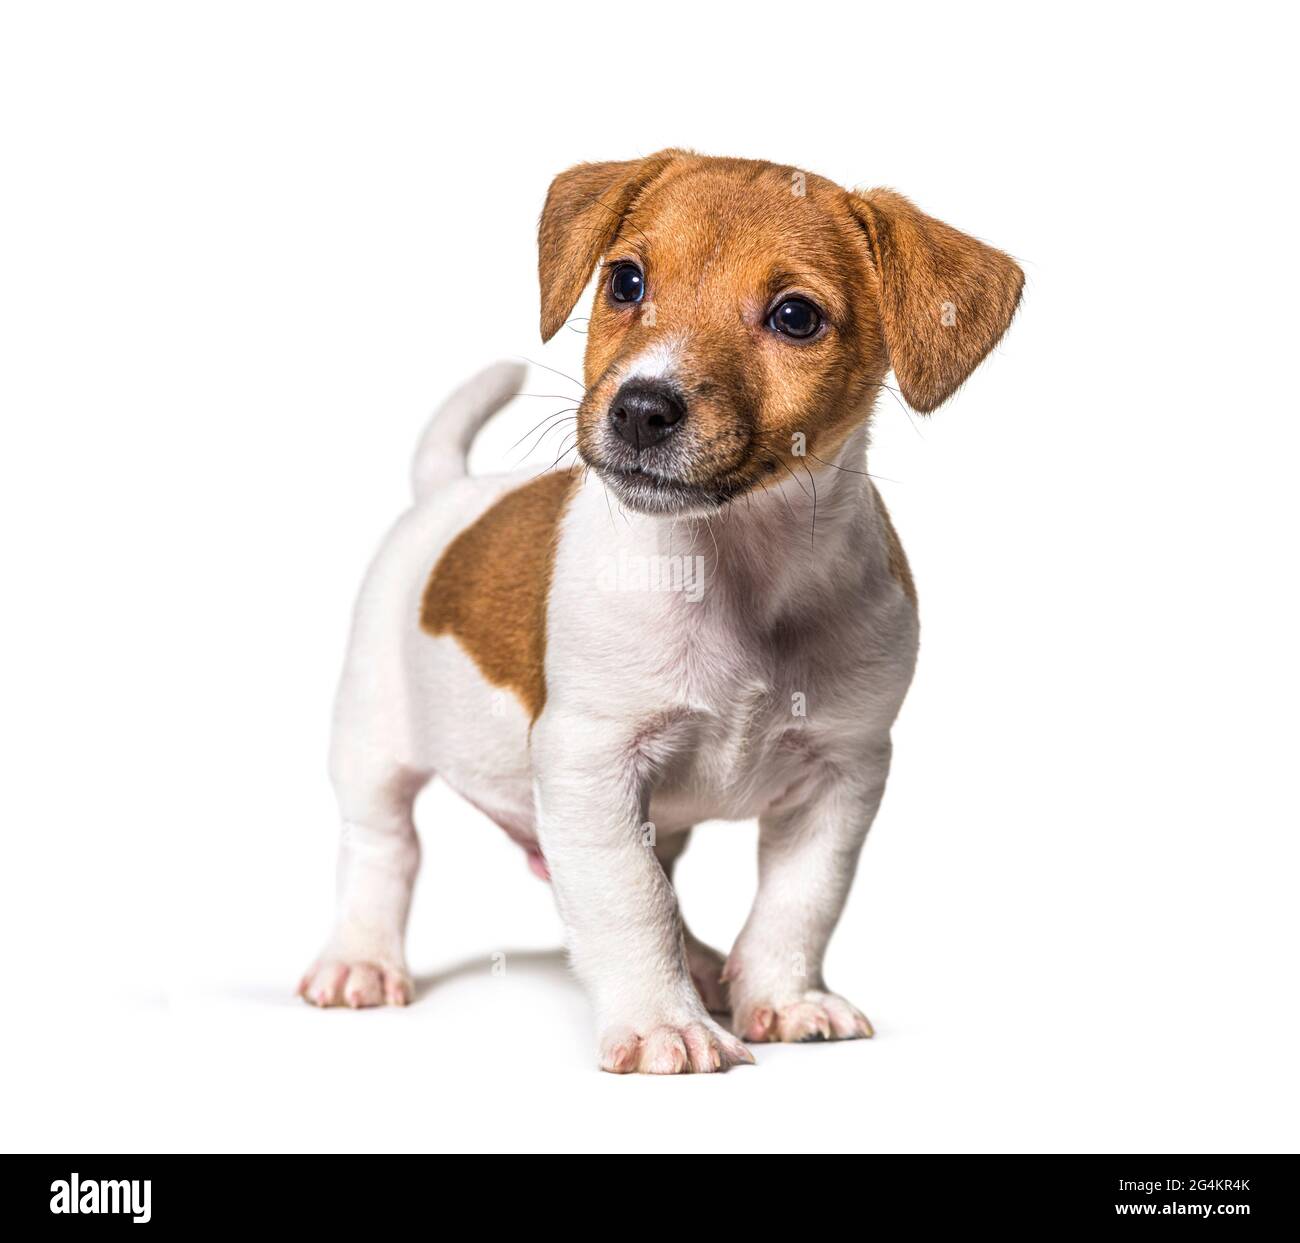 Cucciolo Jack russel terrier cane, due mesi, guardando via, isolato su bianco Foto Stock